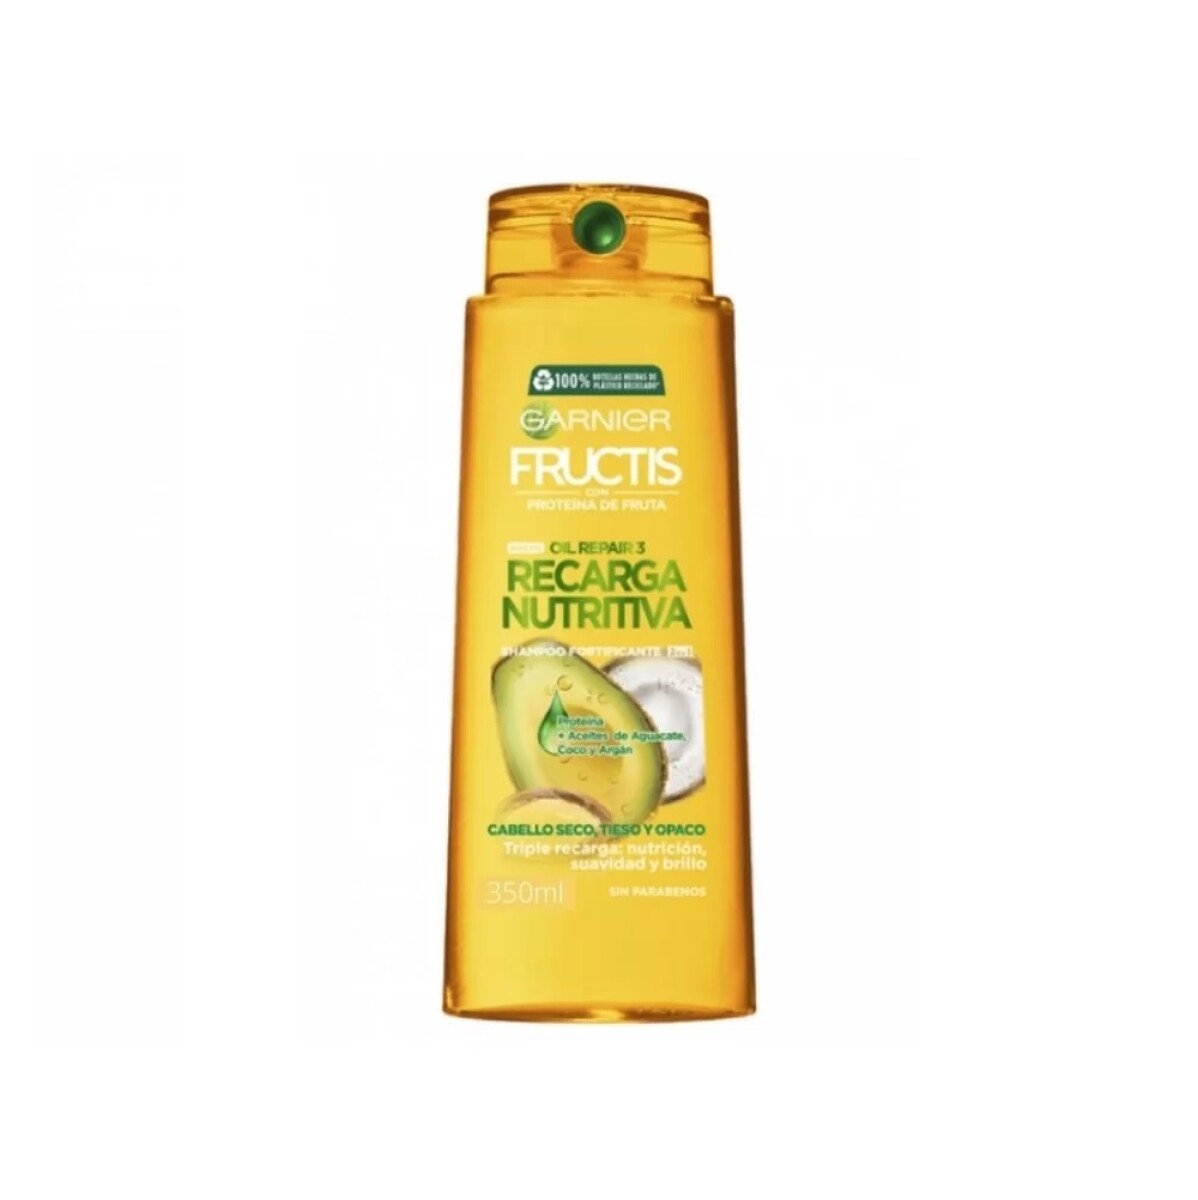 Shampoo Fructis Recarga Nutritiva 350 Ml. 